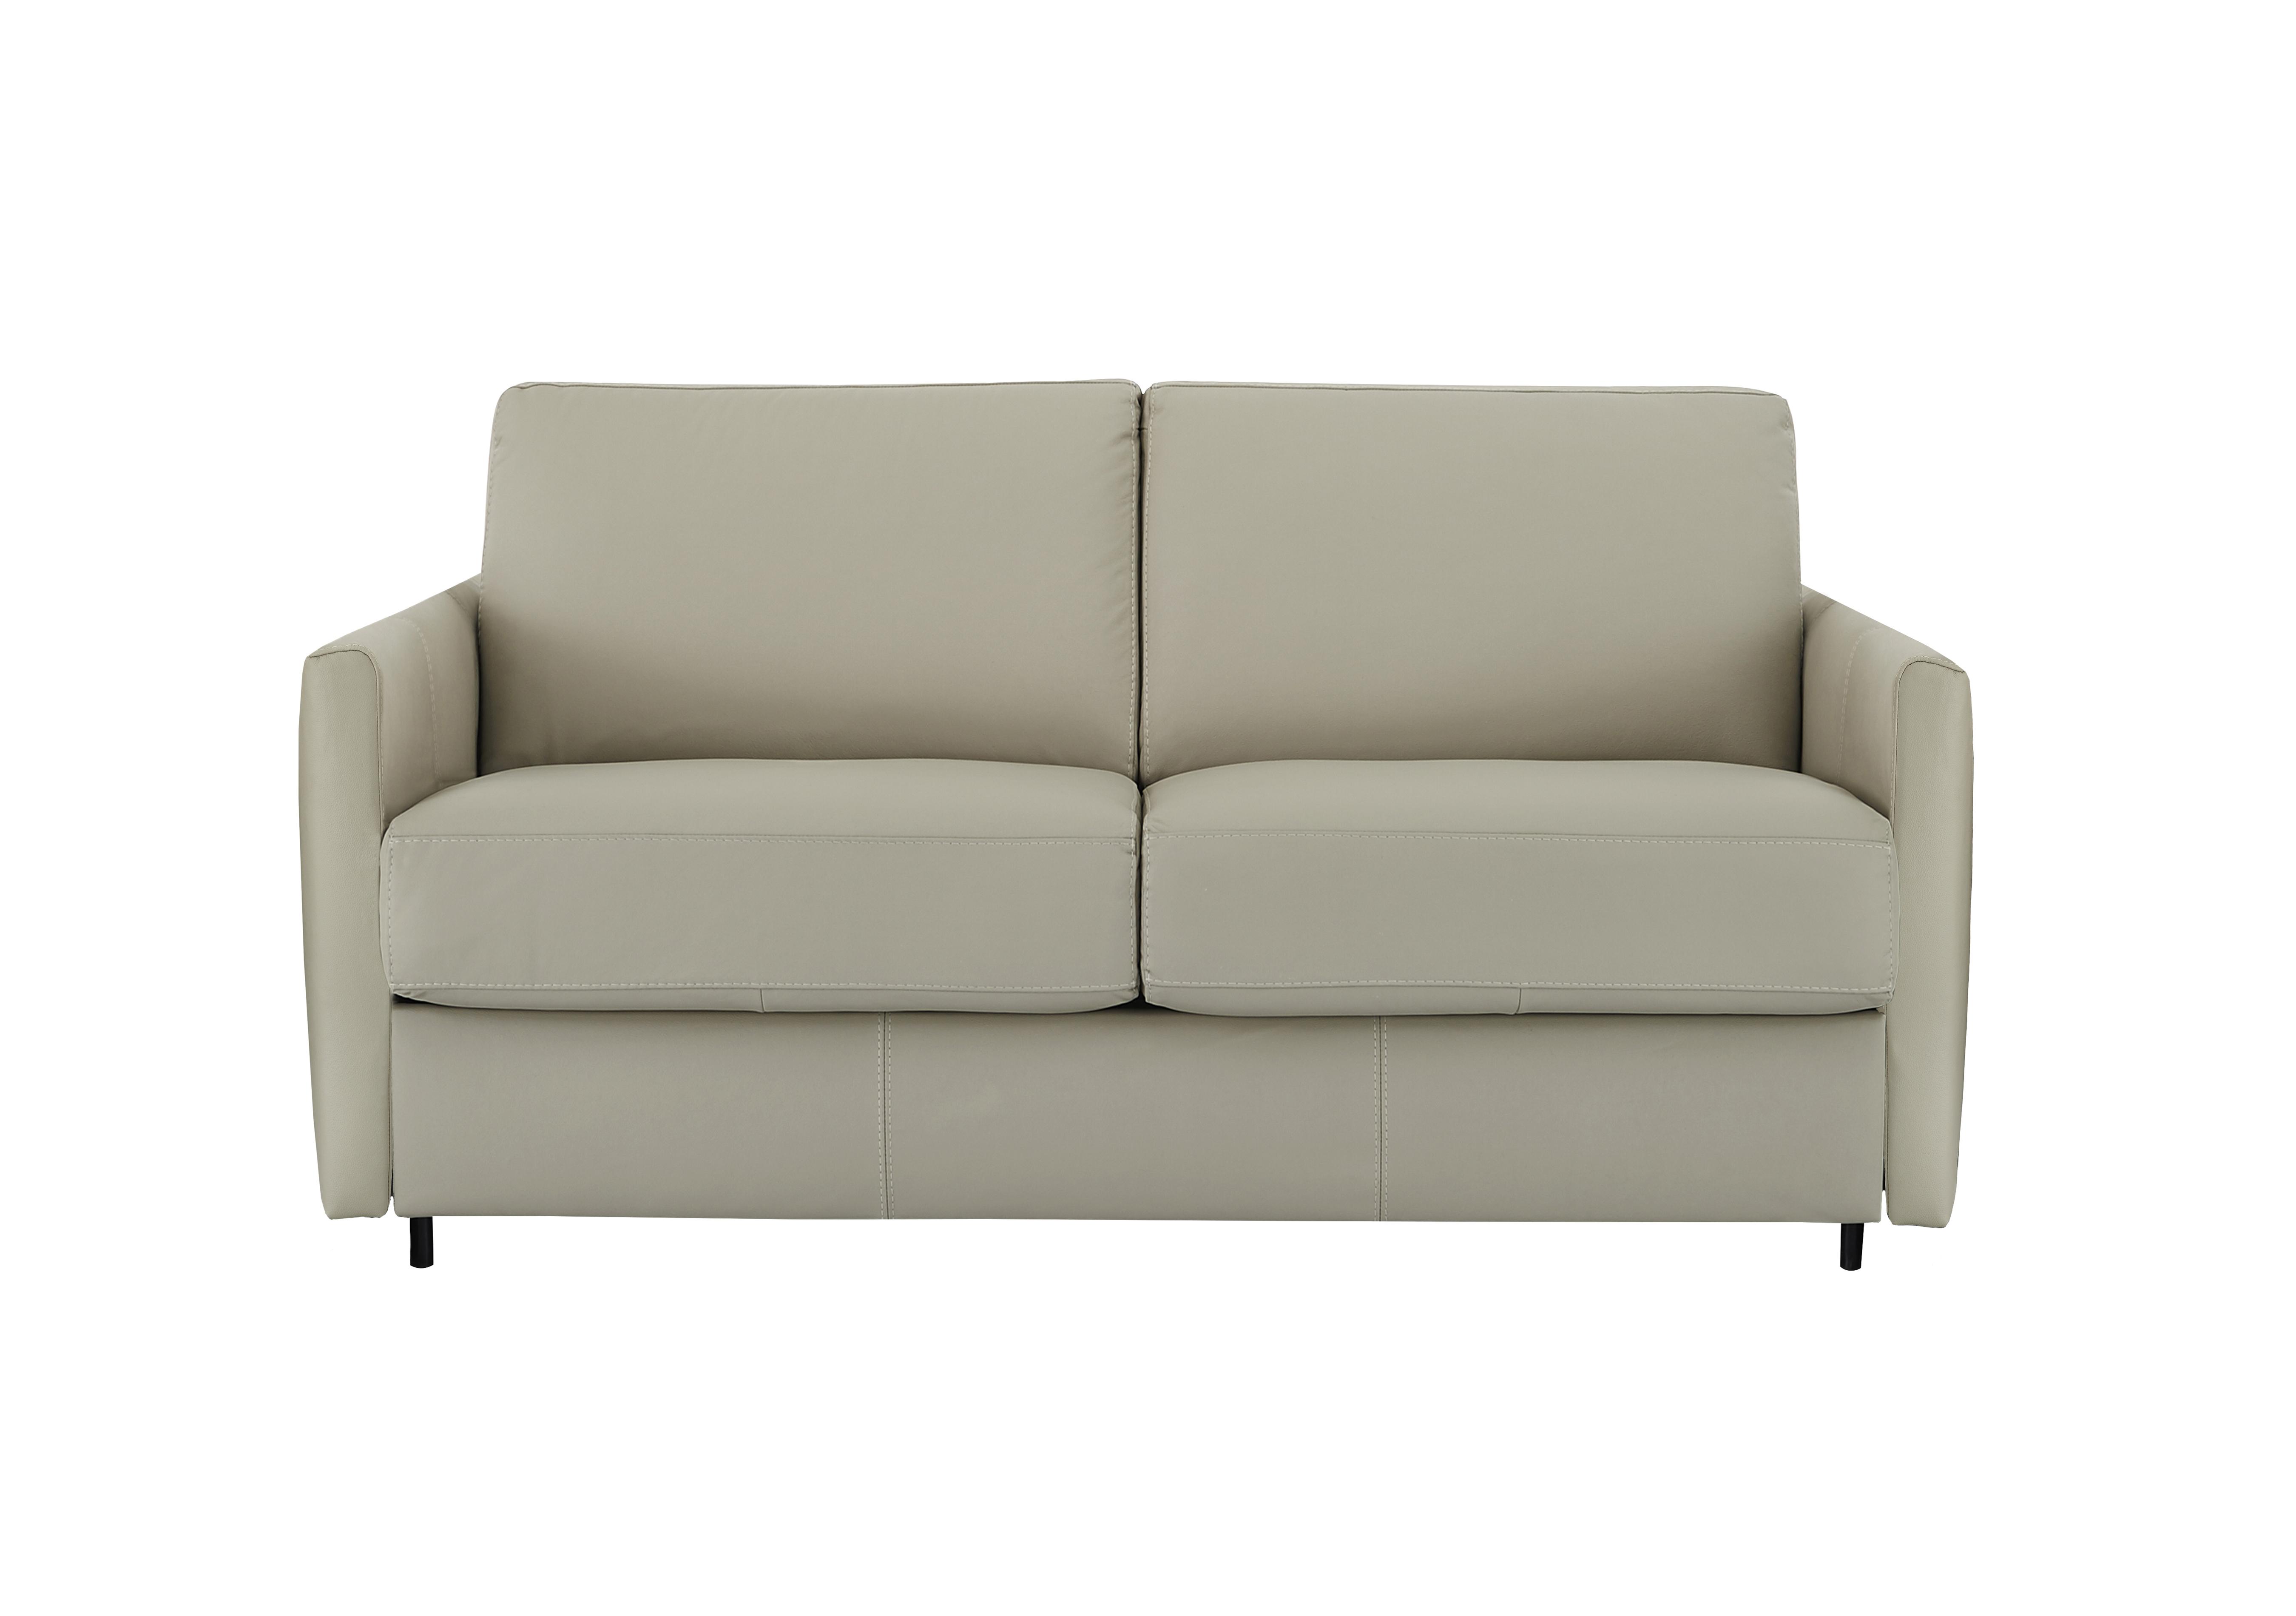 Alcova 2 Seater Leather Sofa Bed with Slim Arms in Torello Tortora 328 on Furniture Village